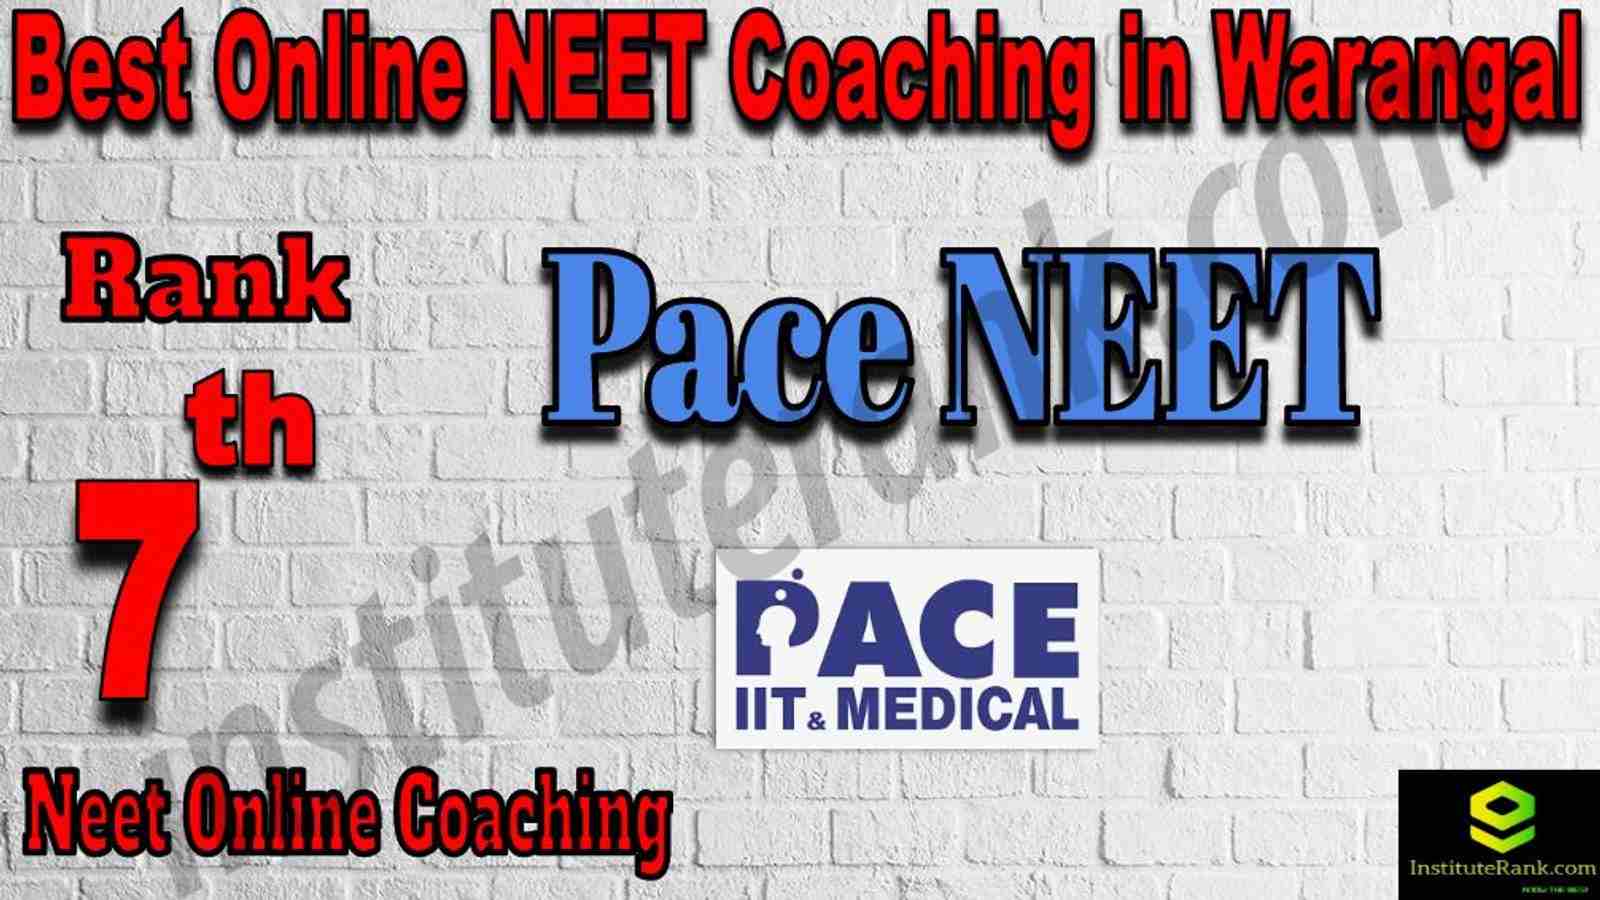 7th Best Online Neet Coaching in Warangal